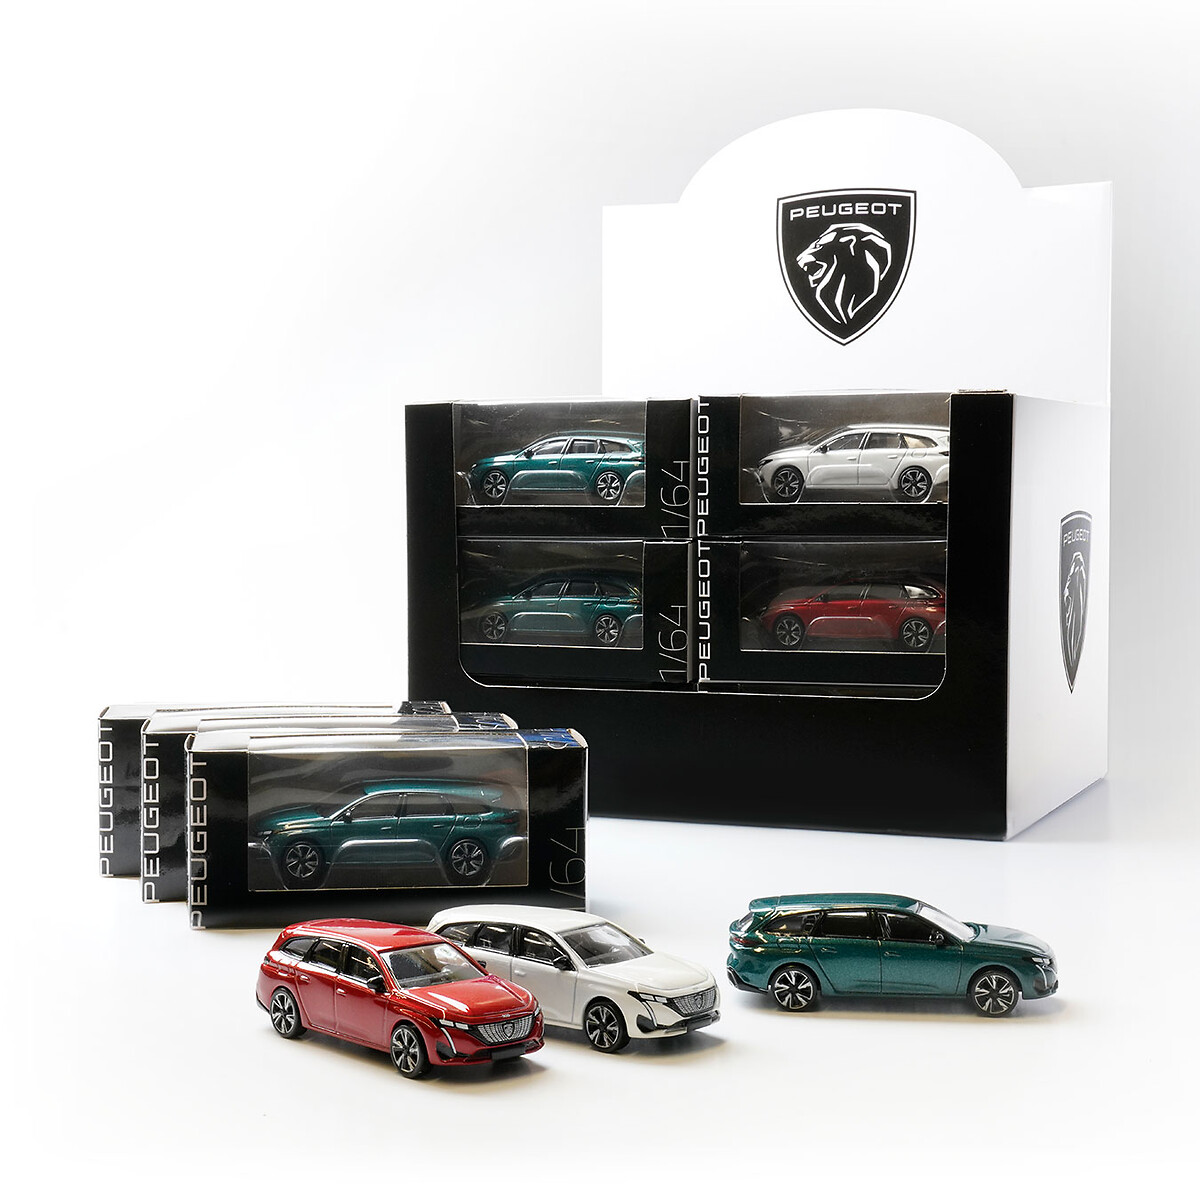 Gift idea! PEUGEOT presents the new 308 miniatures, Peugeot